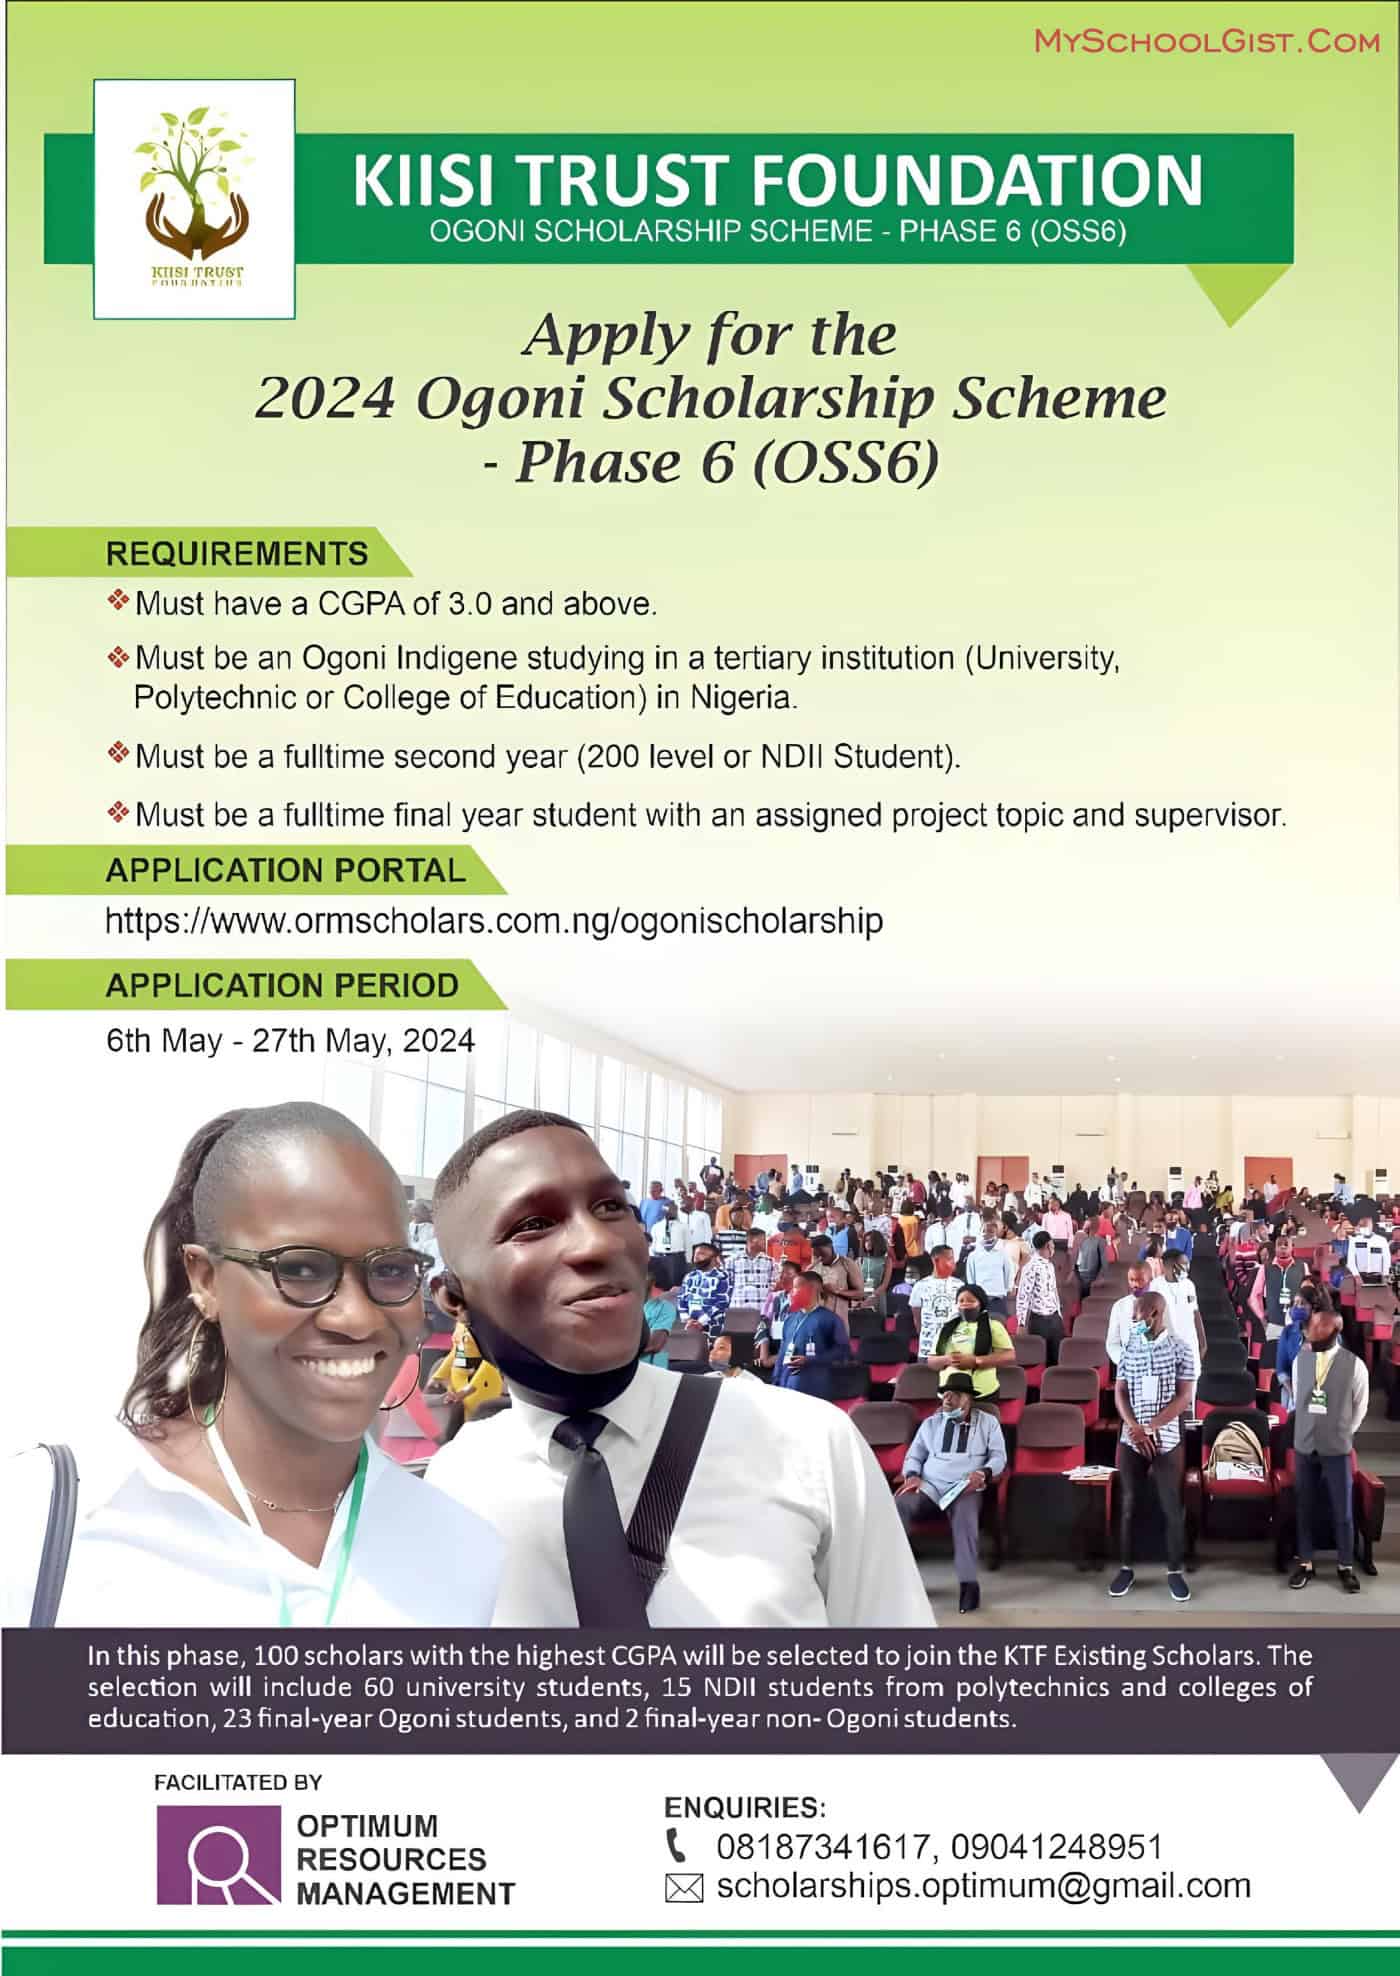 Kiisi Trust Foundation (KTF) Ogoni Scholarship Scheme